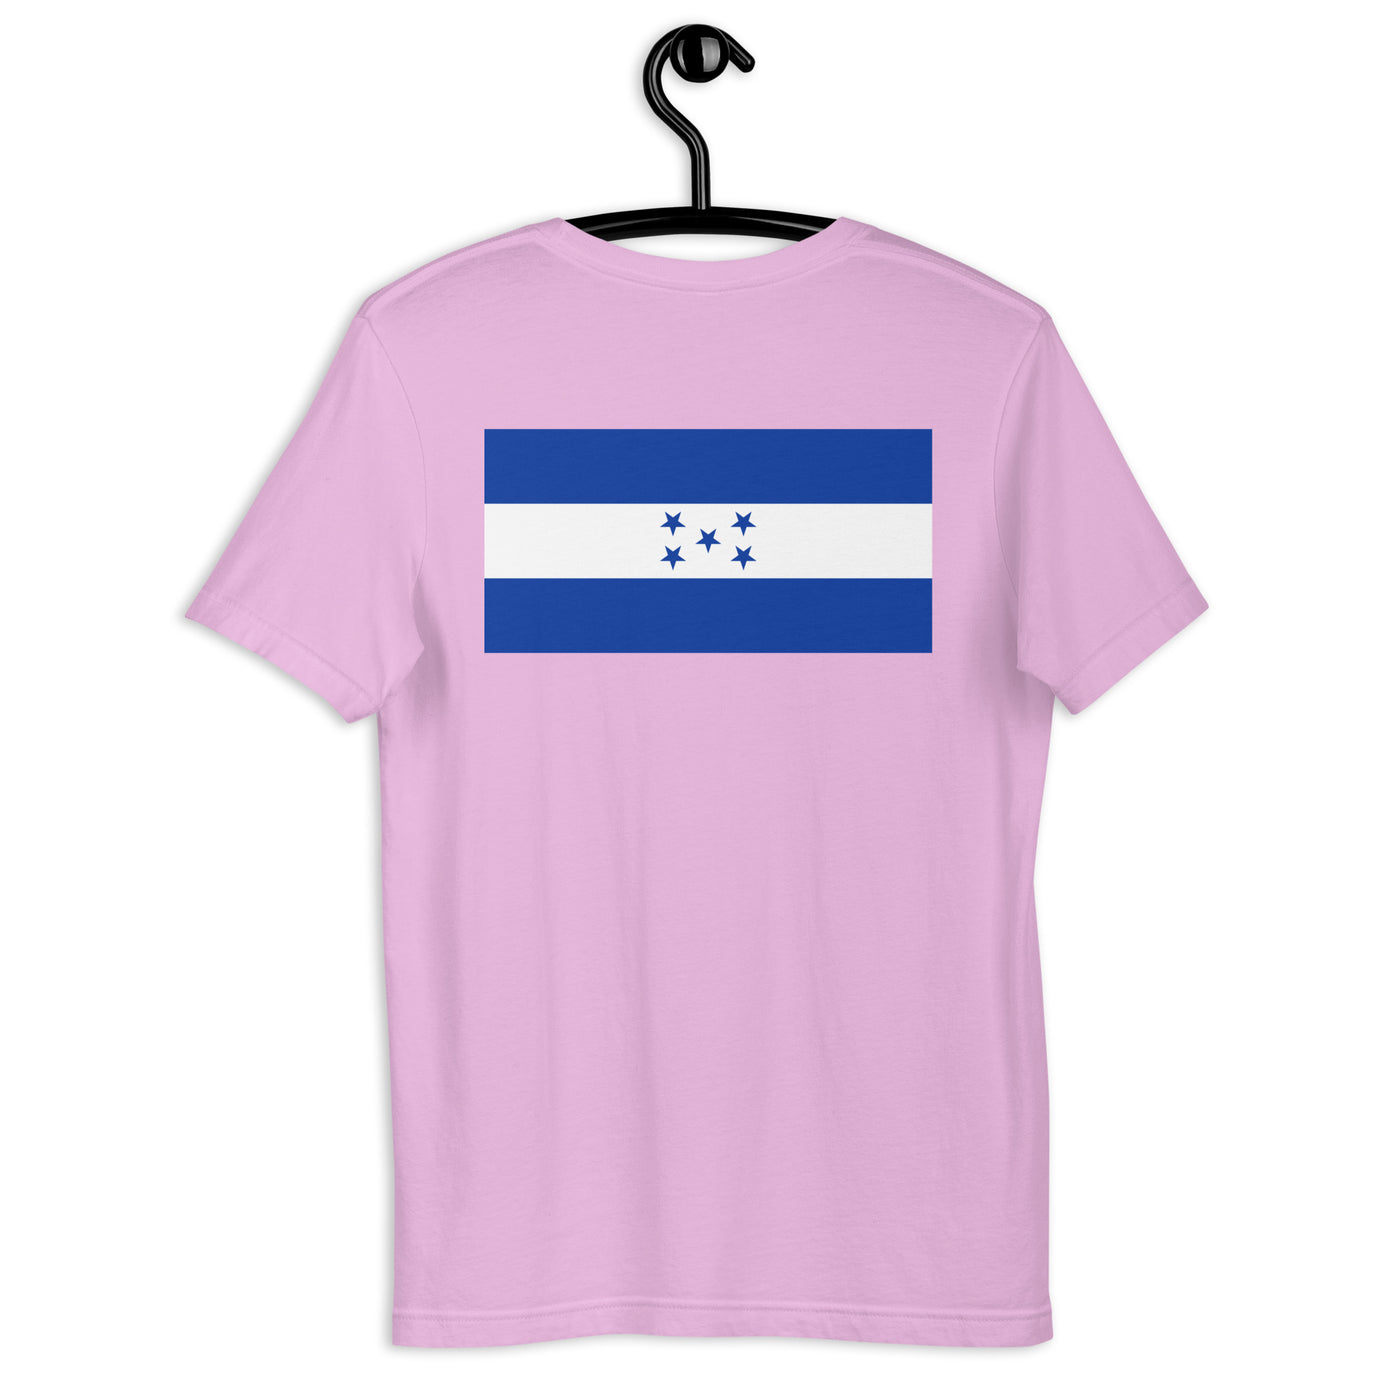 Honduras POR VIDA (Black Text) Unisex t-shirt